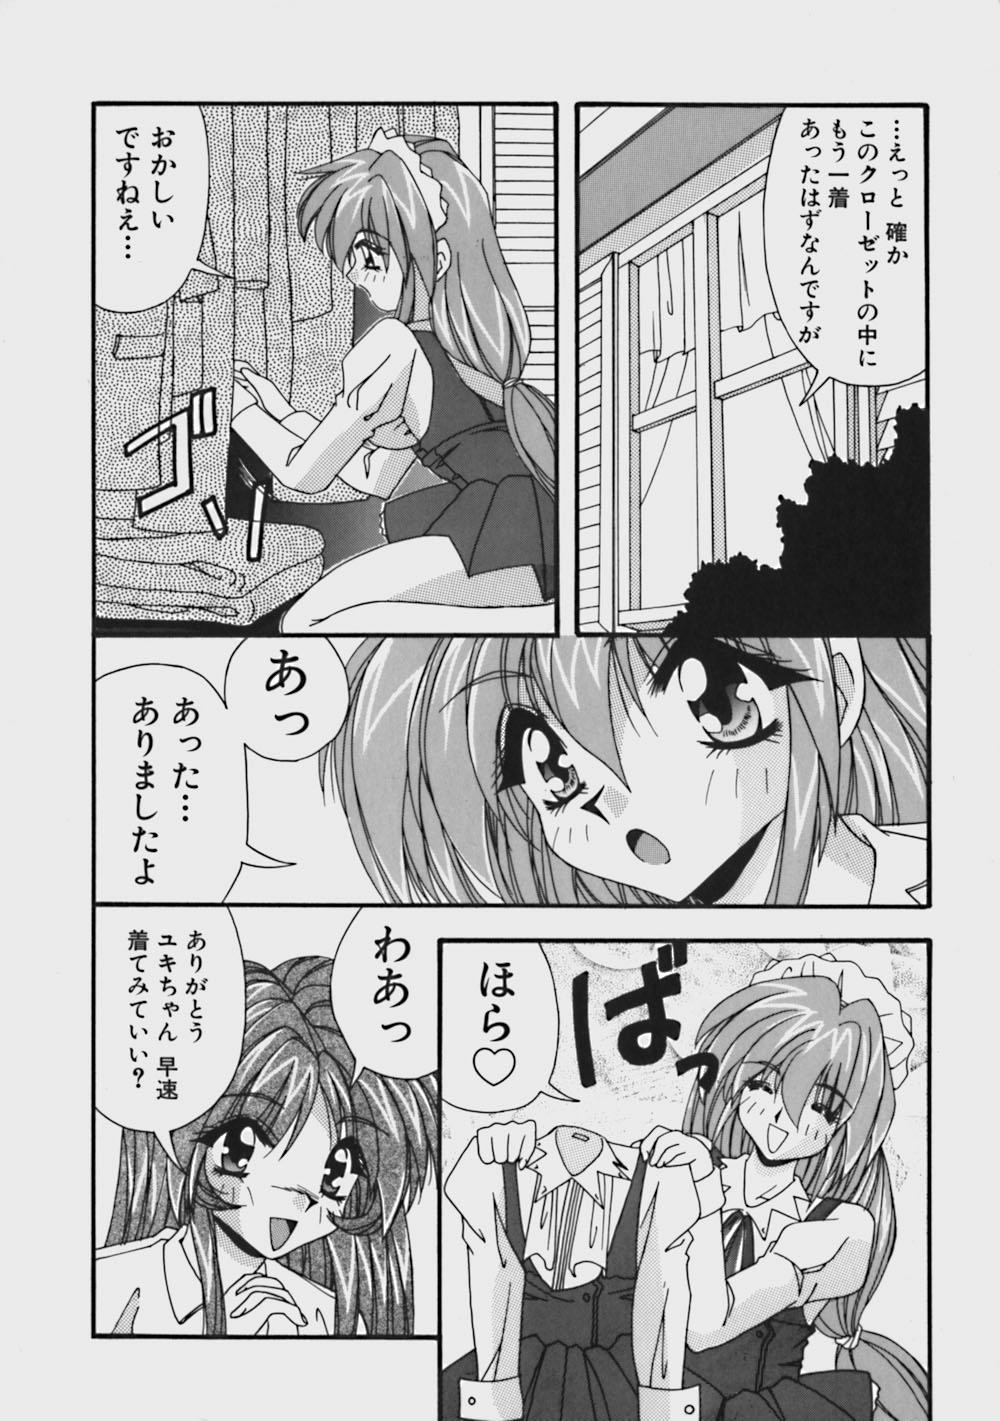 Curious Kimama ni Peach Girl - Selfish Peach Girl Sis - Page 11